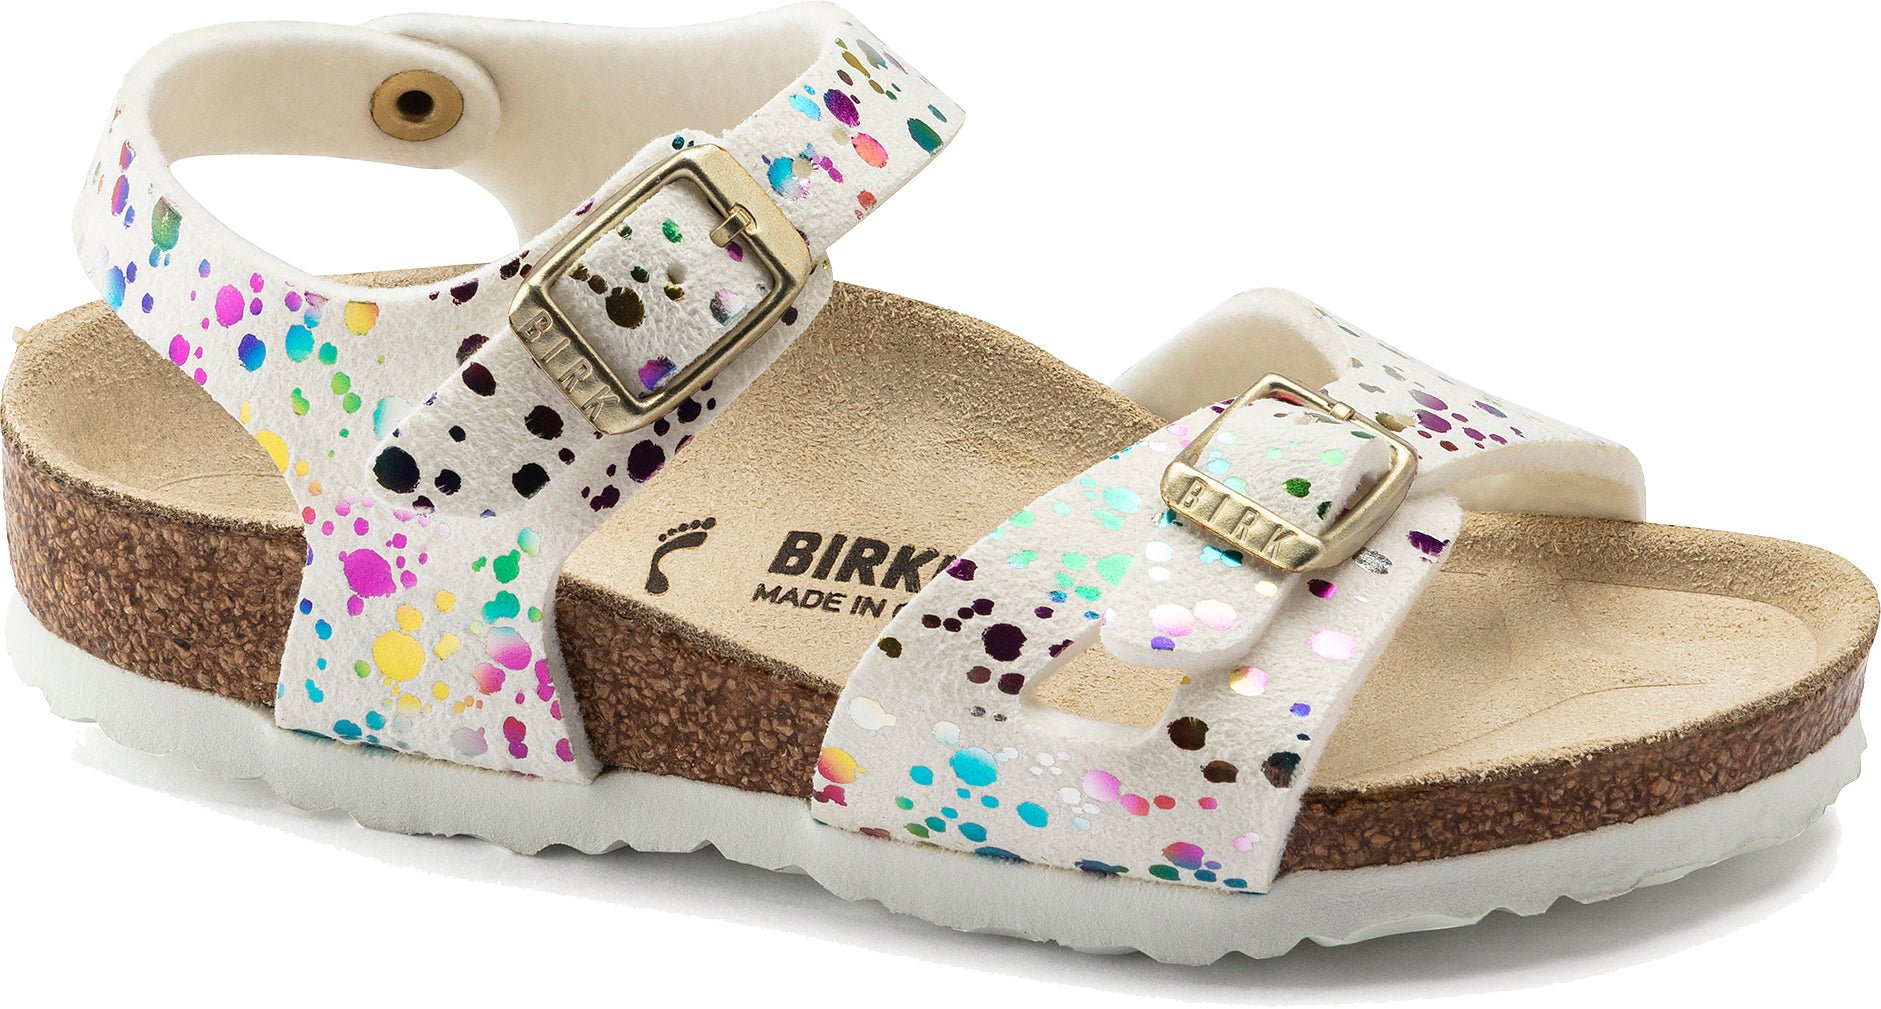 Birkenstock Rio Kids Confetti Microfiber Original Footbed - Grady’s Feet Essentials - Birkenstock